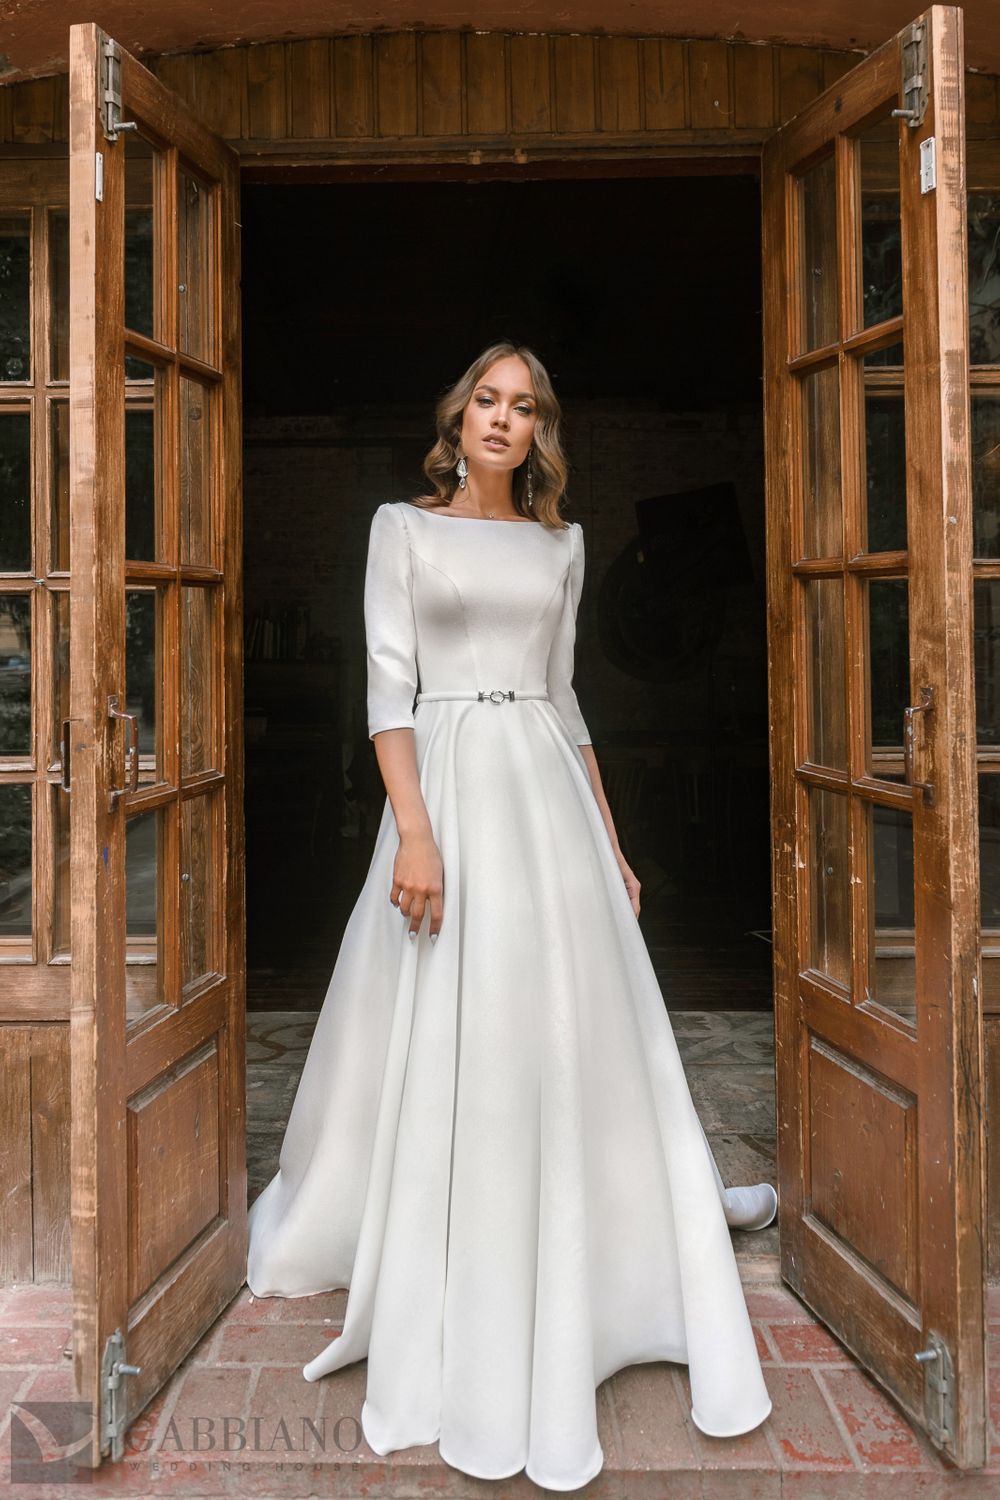 Свадебное платье от бренда Gabbiano 'Вита' атласное